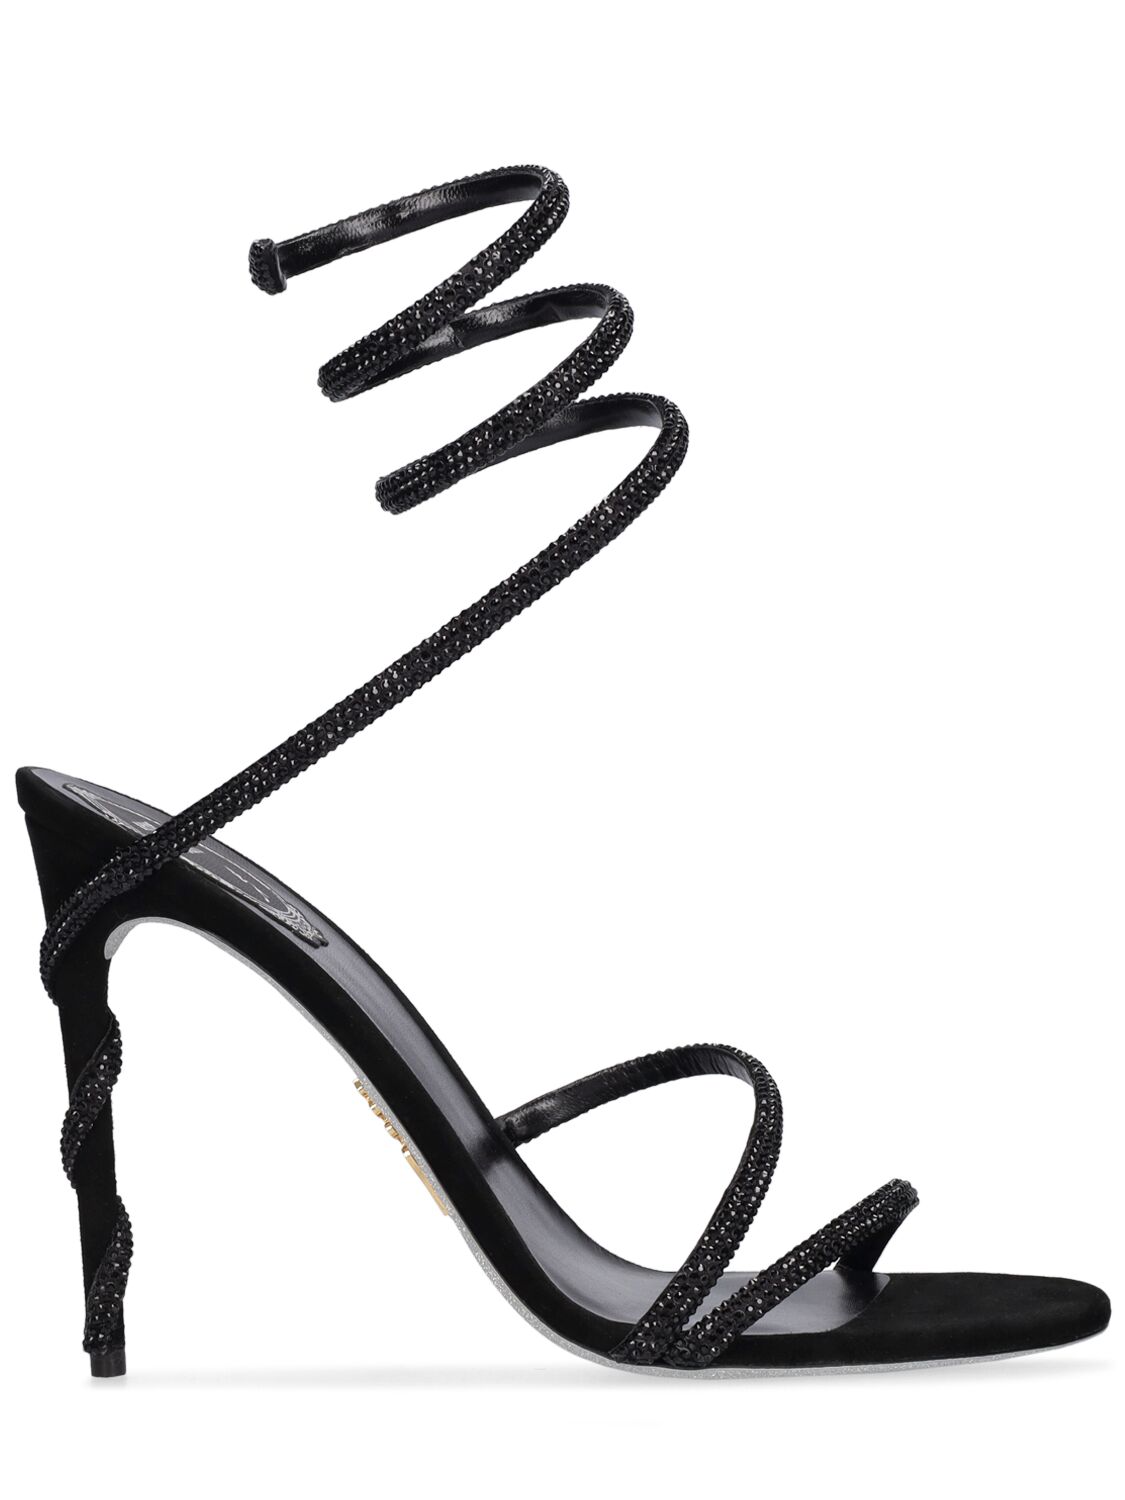 RENÉ CAOVILLA 105mm Satin & Crystal High Heel Sandals